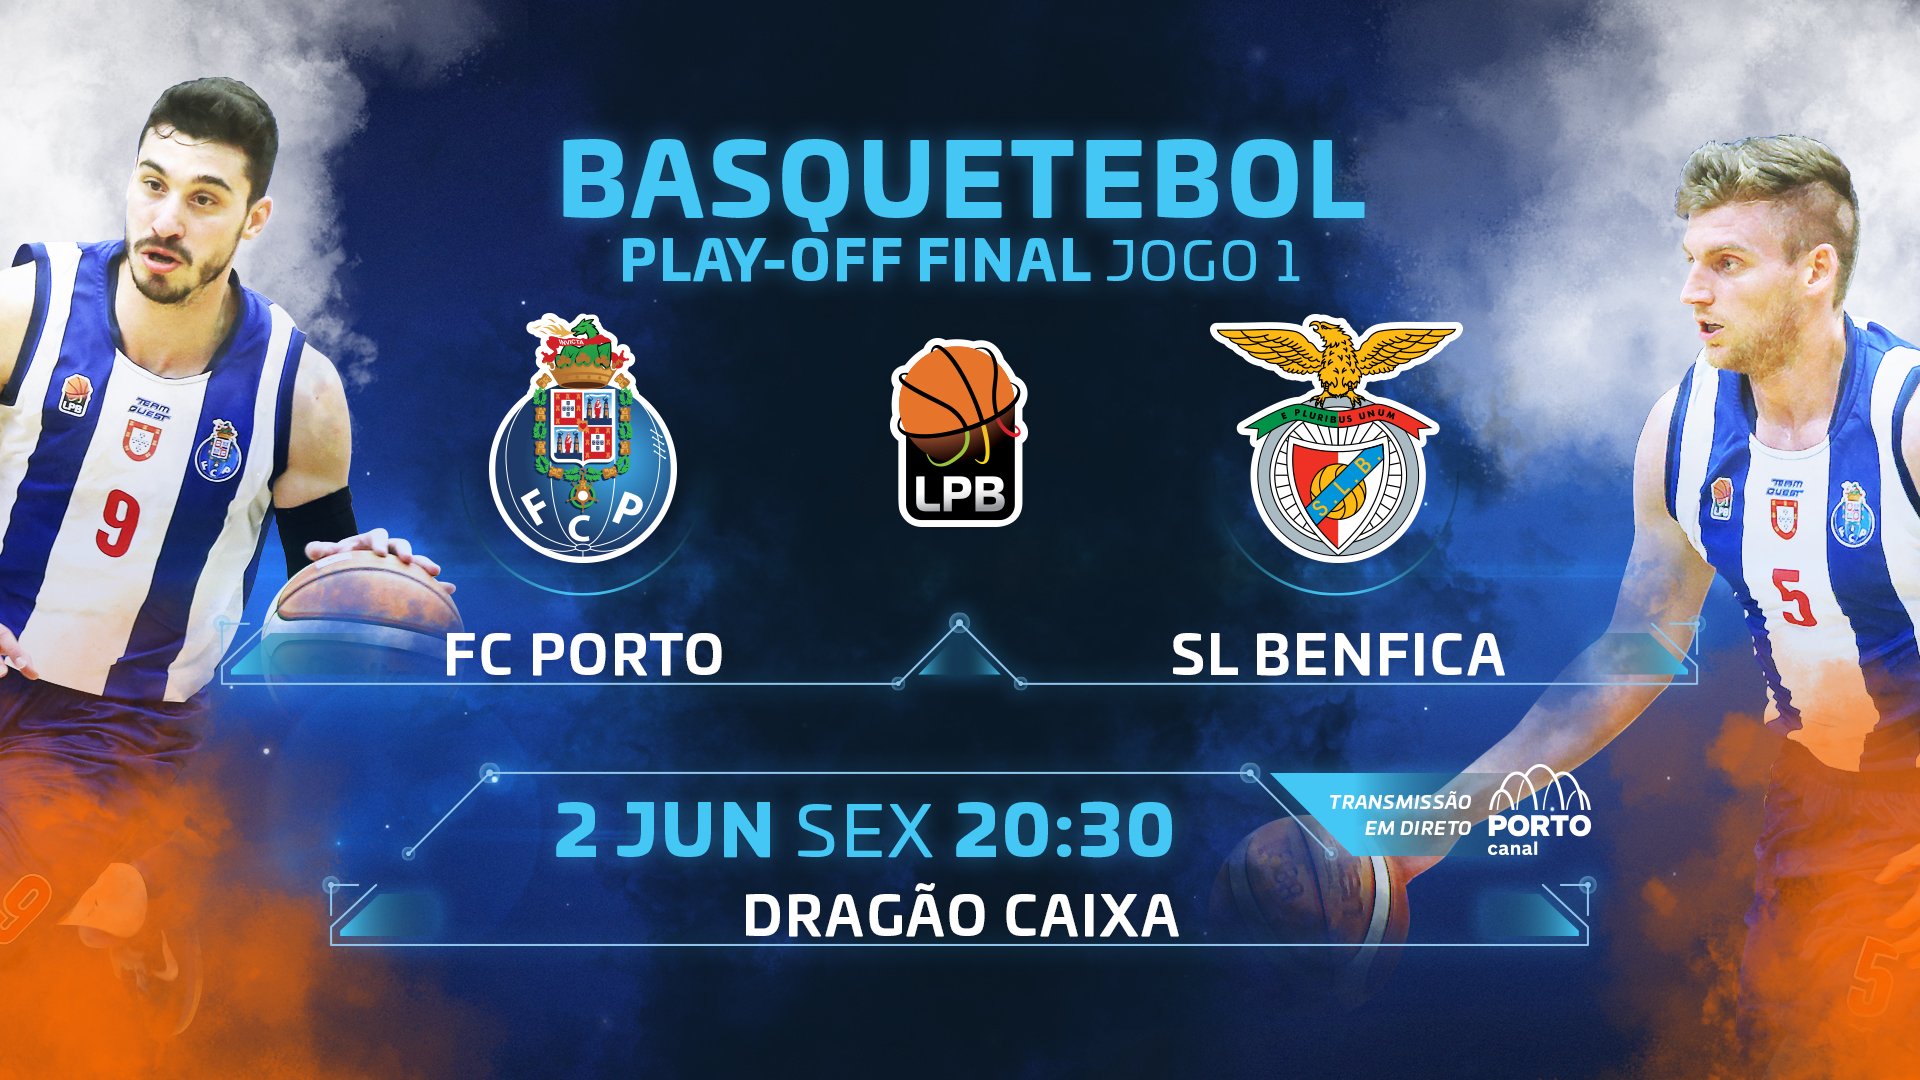 FC Porto Benfica Final Play-off Basquetebol - SL Benfica